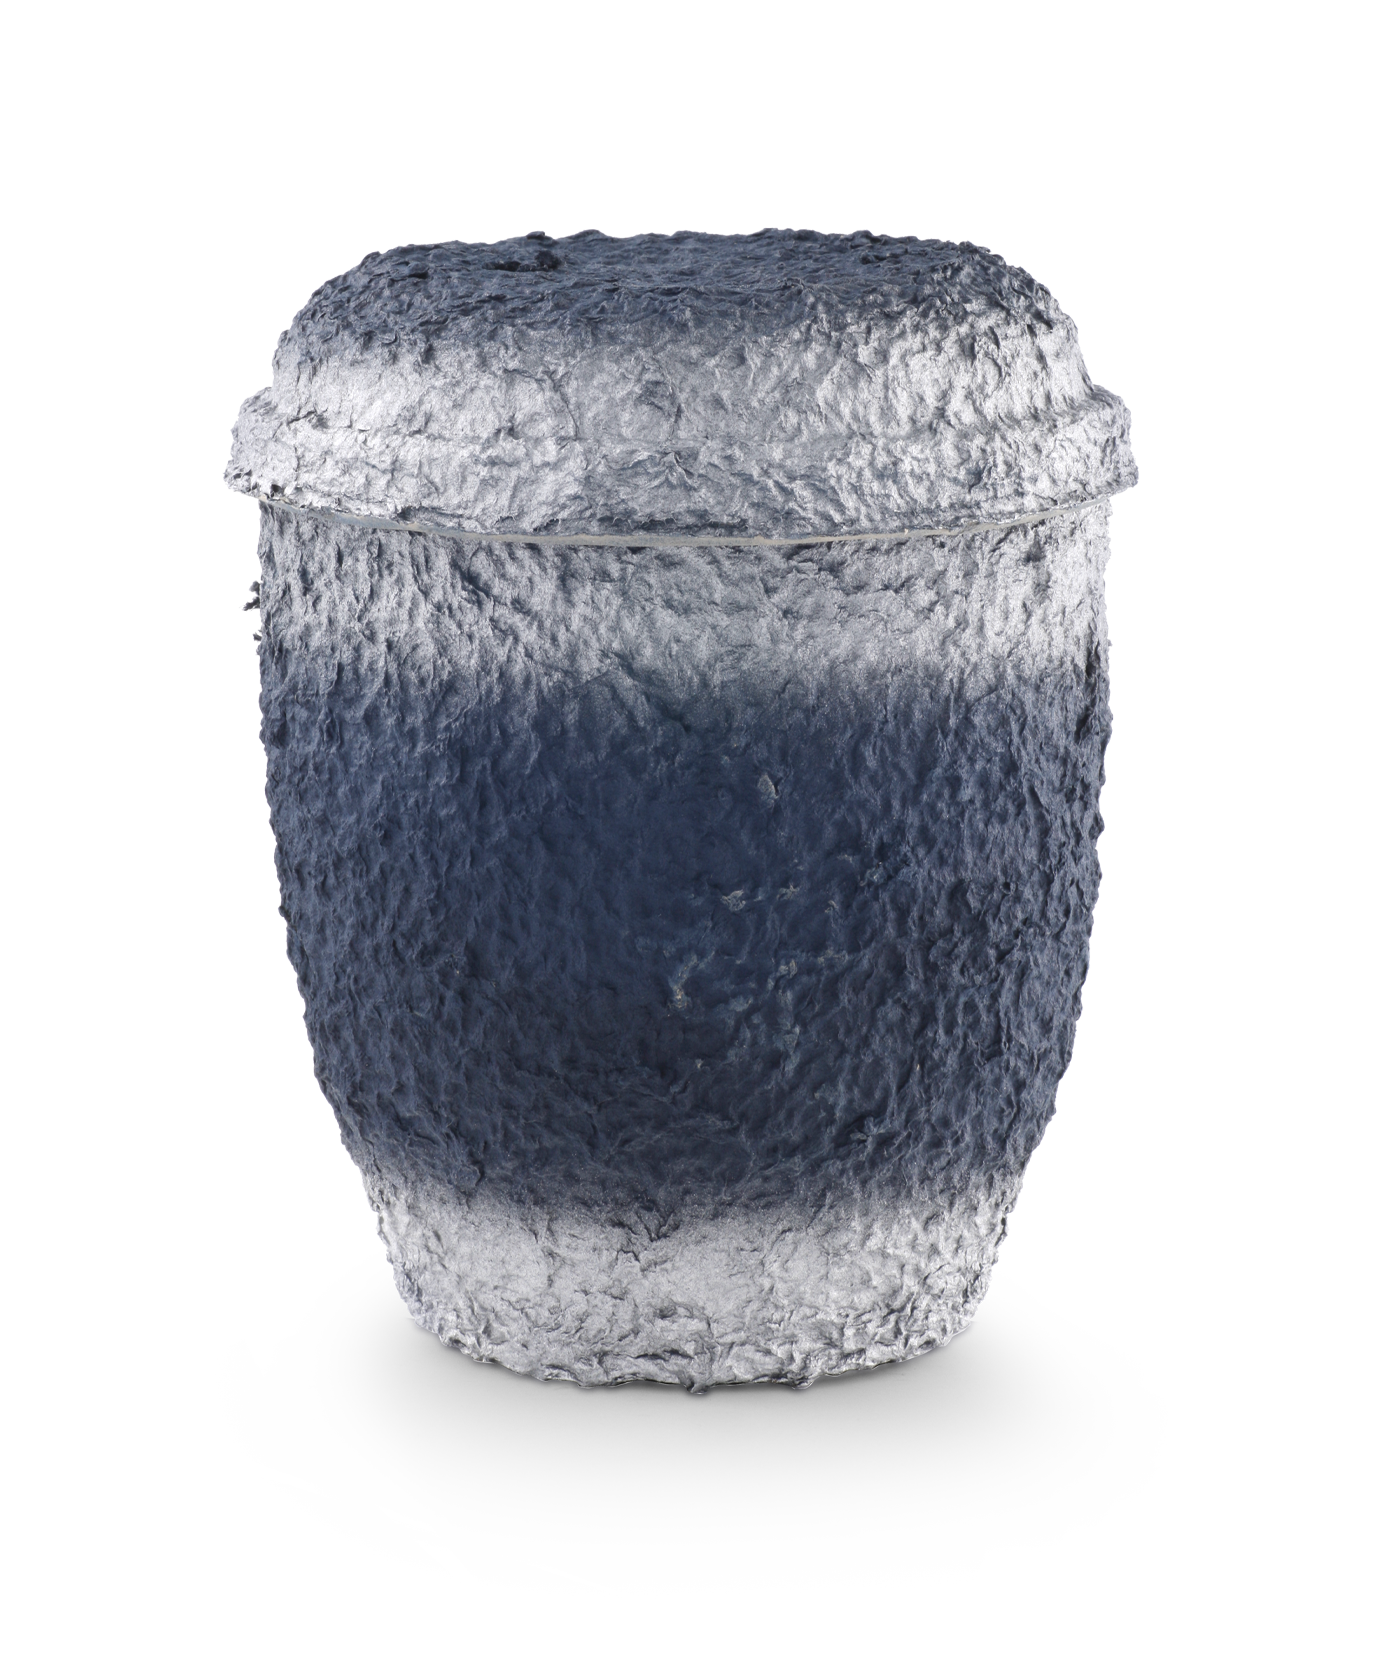 Völsing urn cellulose sea urn